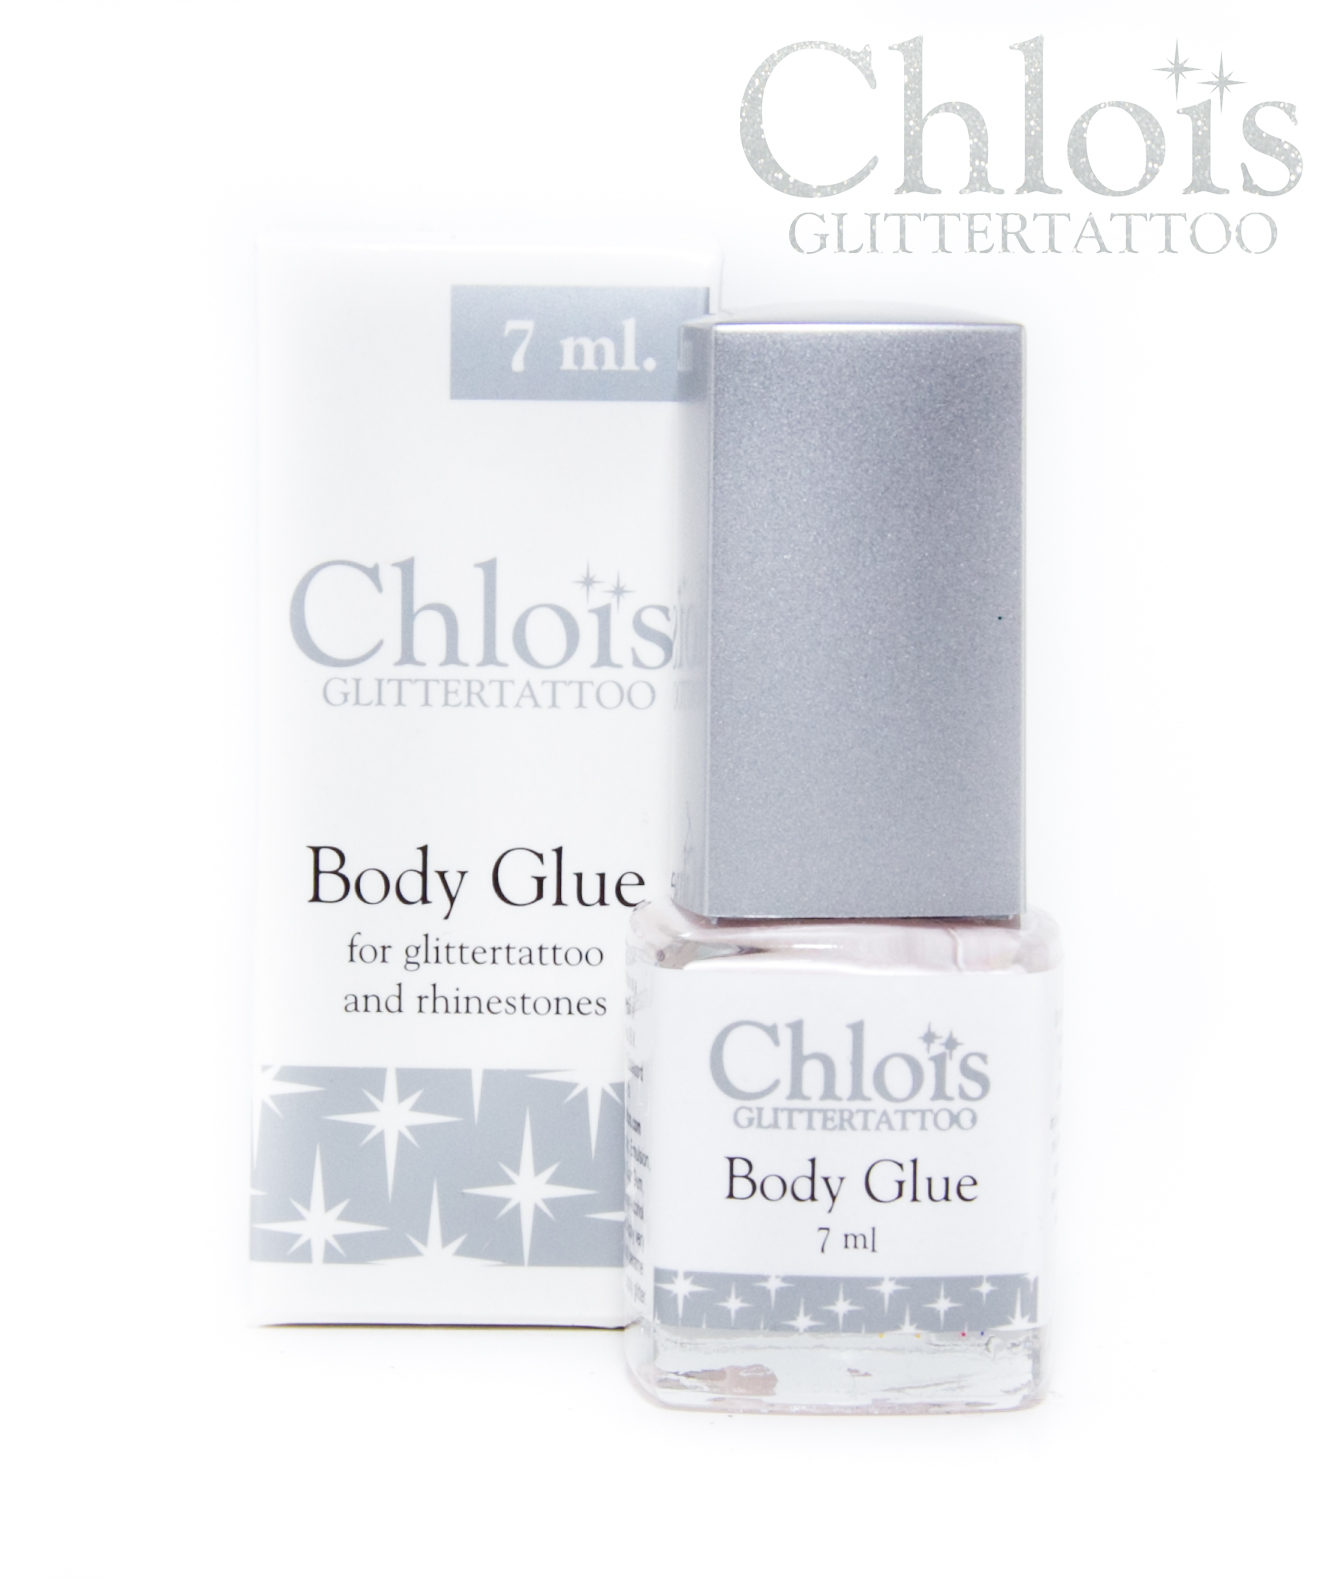 Chloïs Body Glue - 7 ml